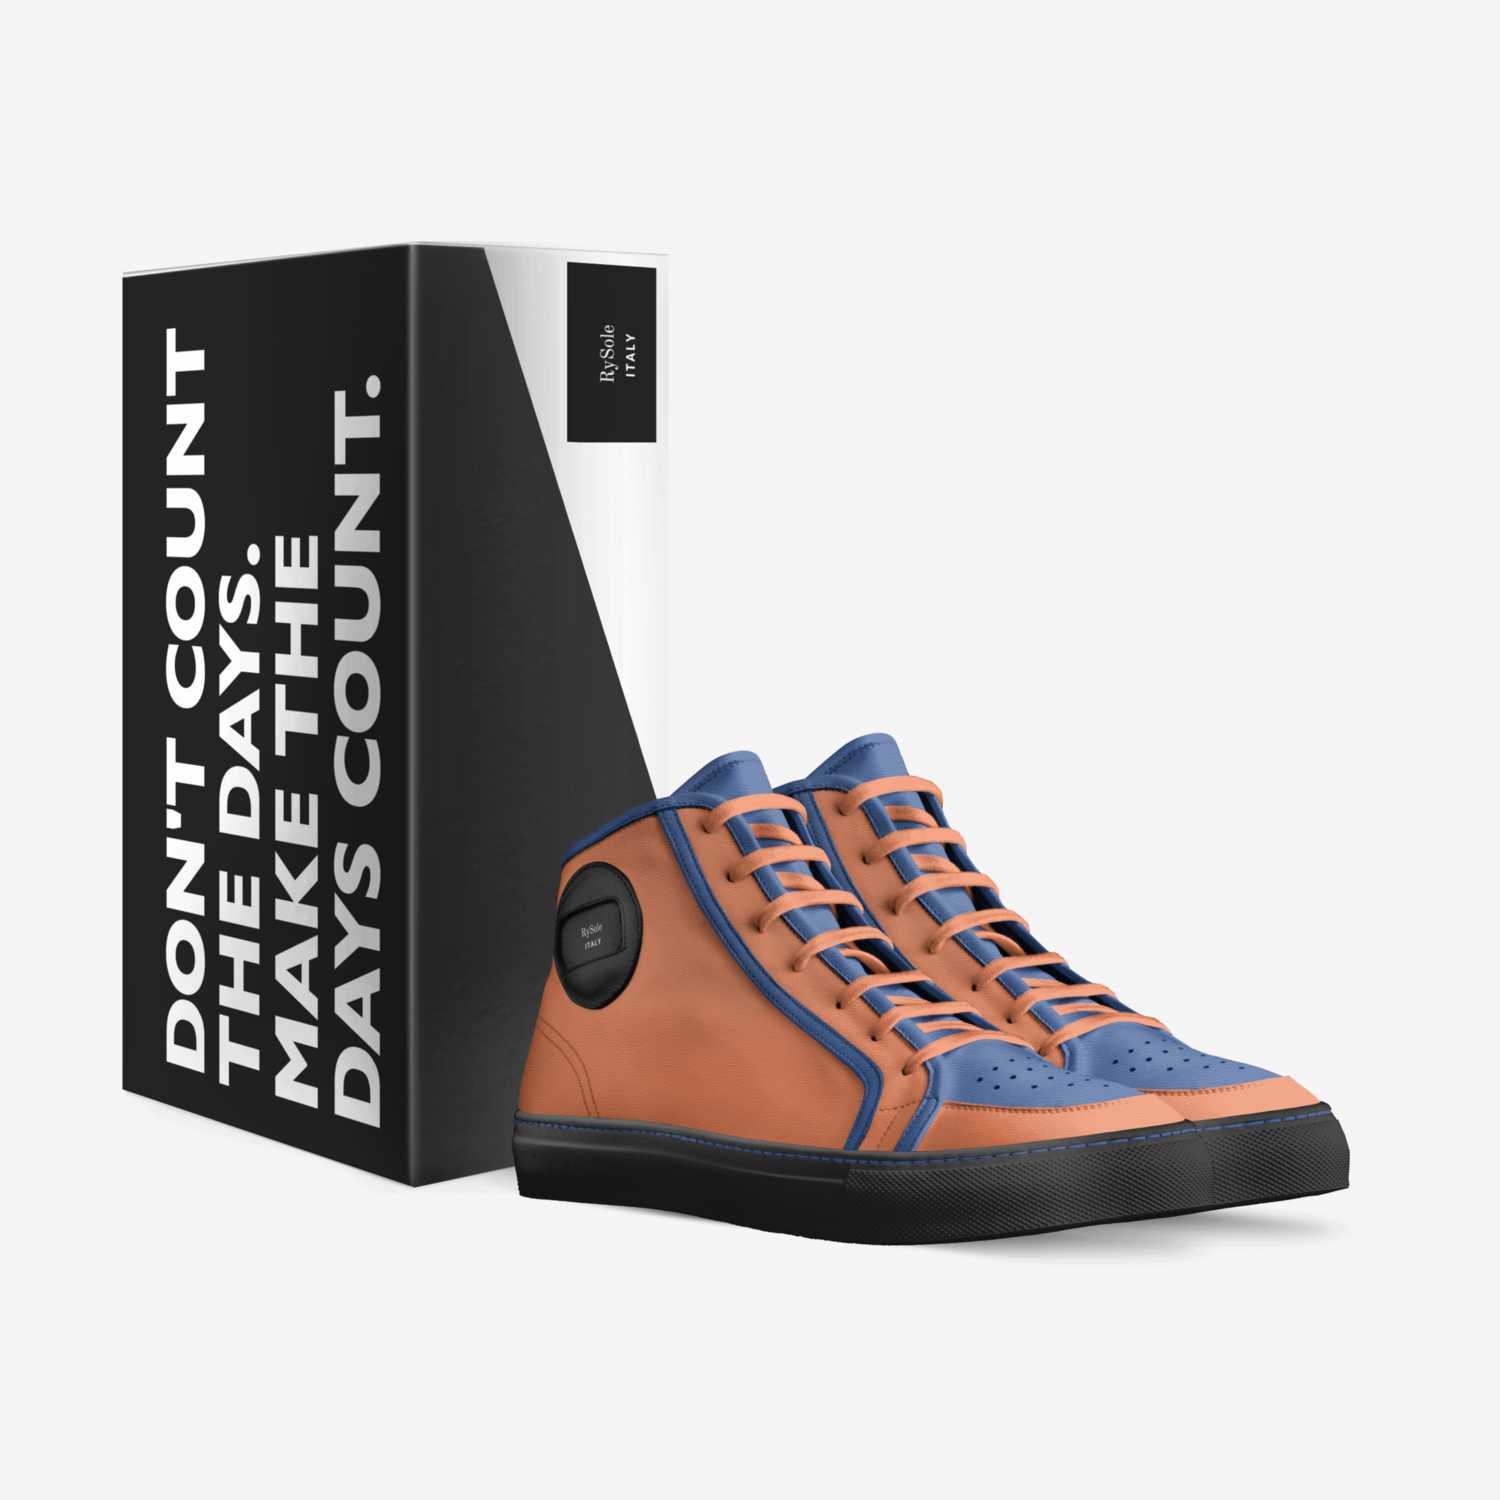 SoleWalk Men custom made in Italy shoes by Ryan Echevarria | Box view